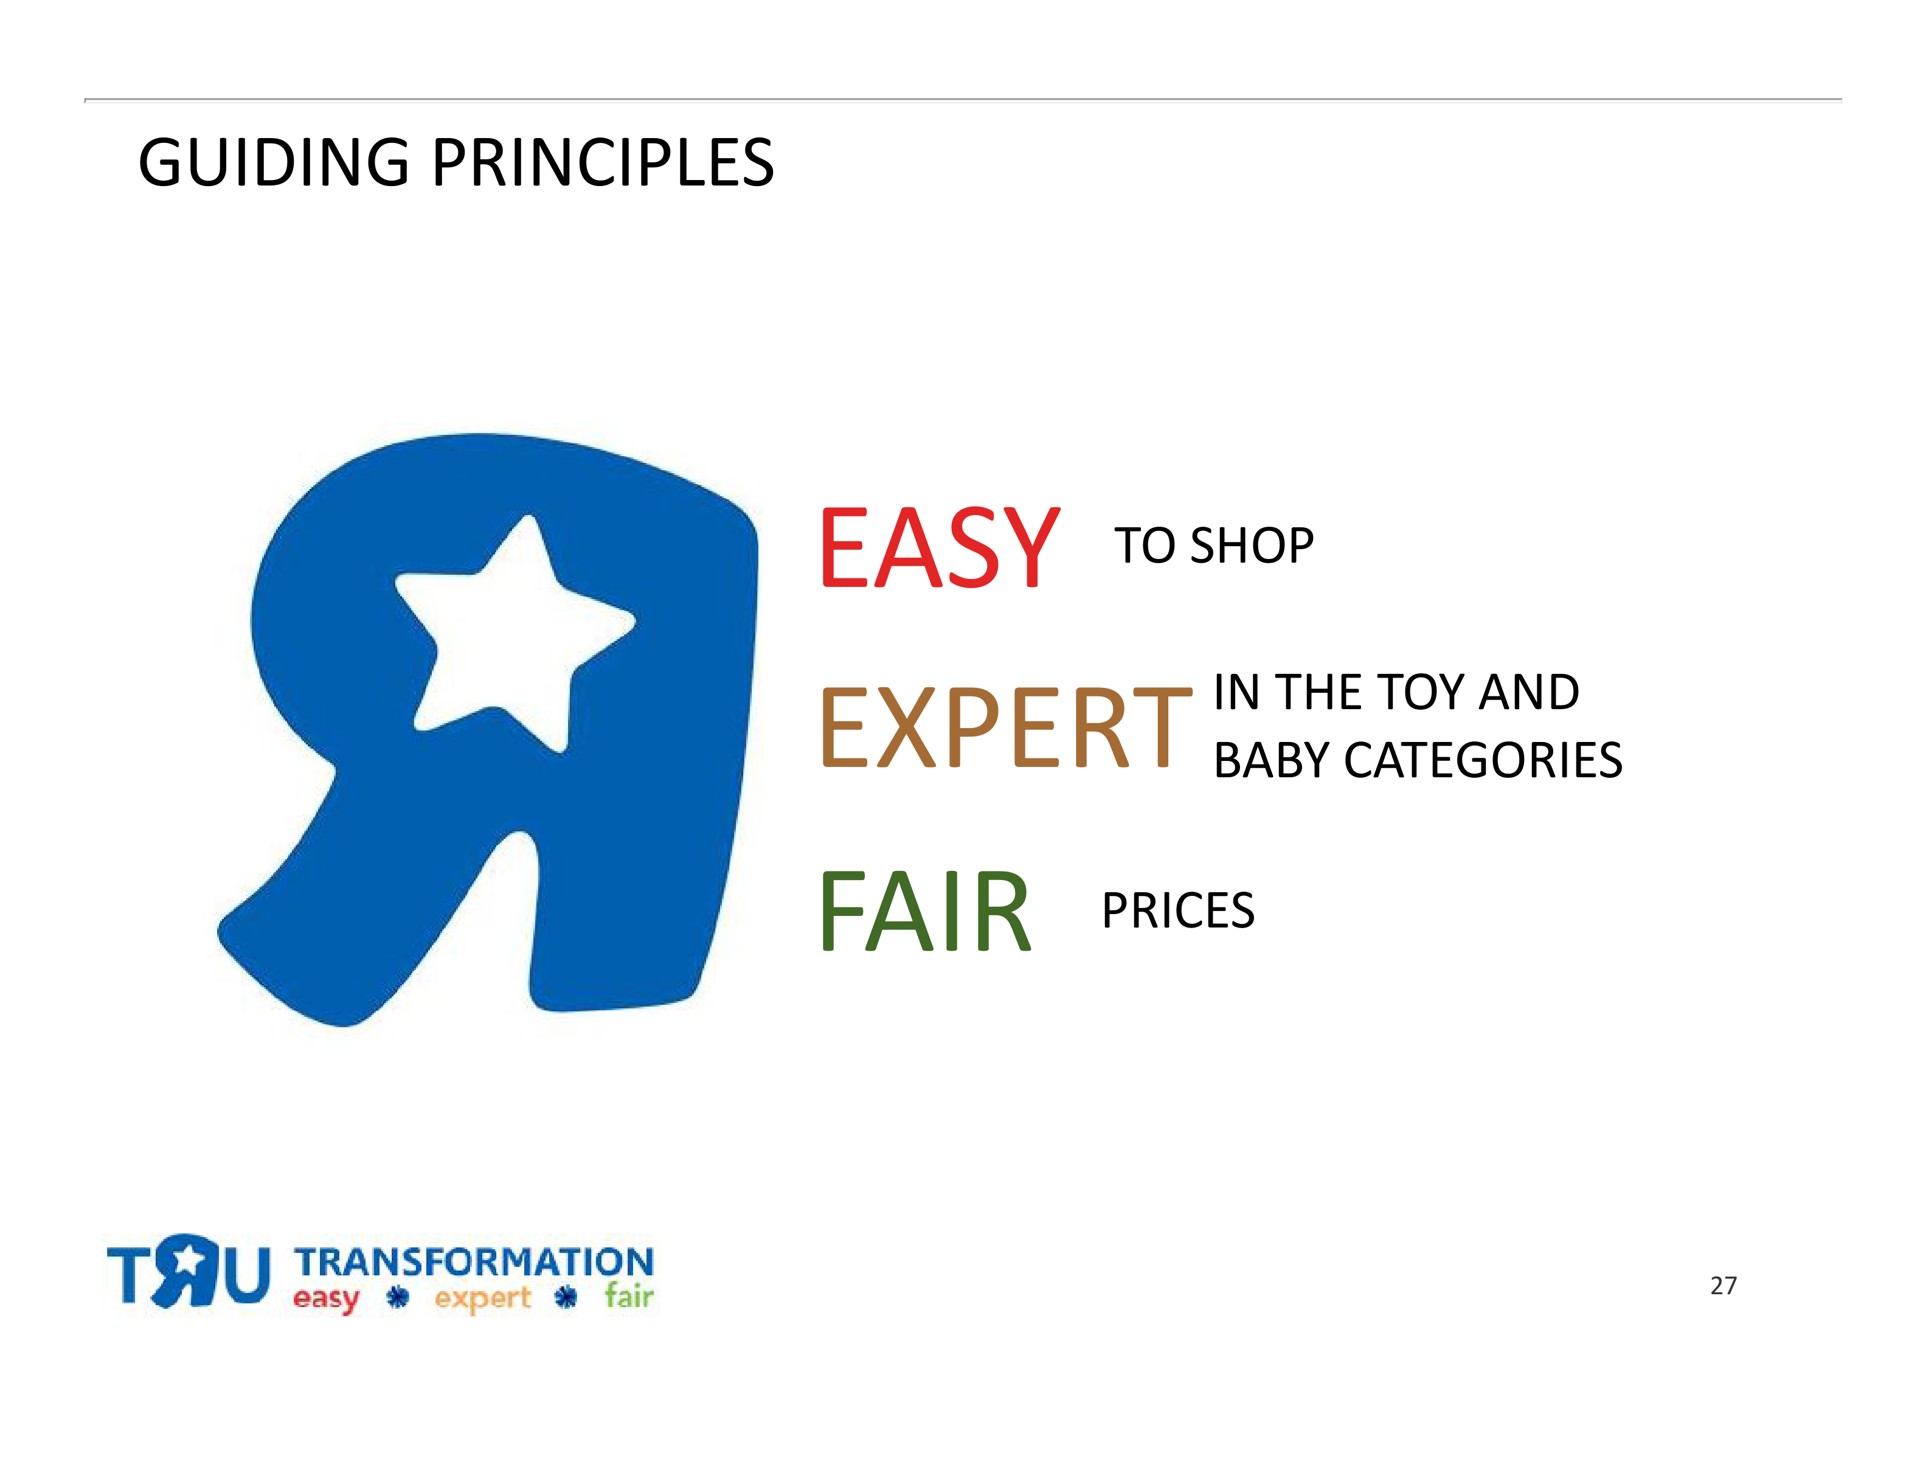 guiding principles easy expert fair prices | Toys R Us